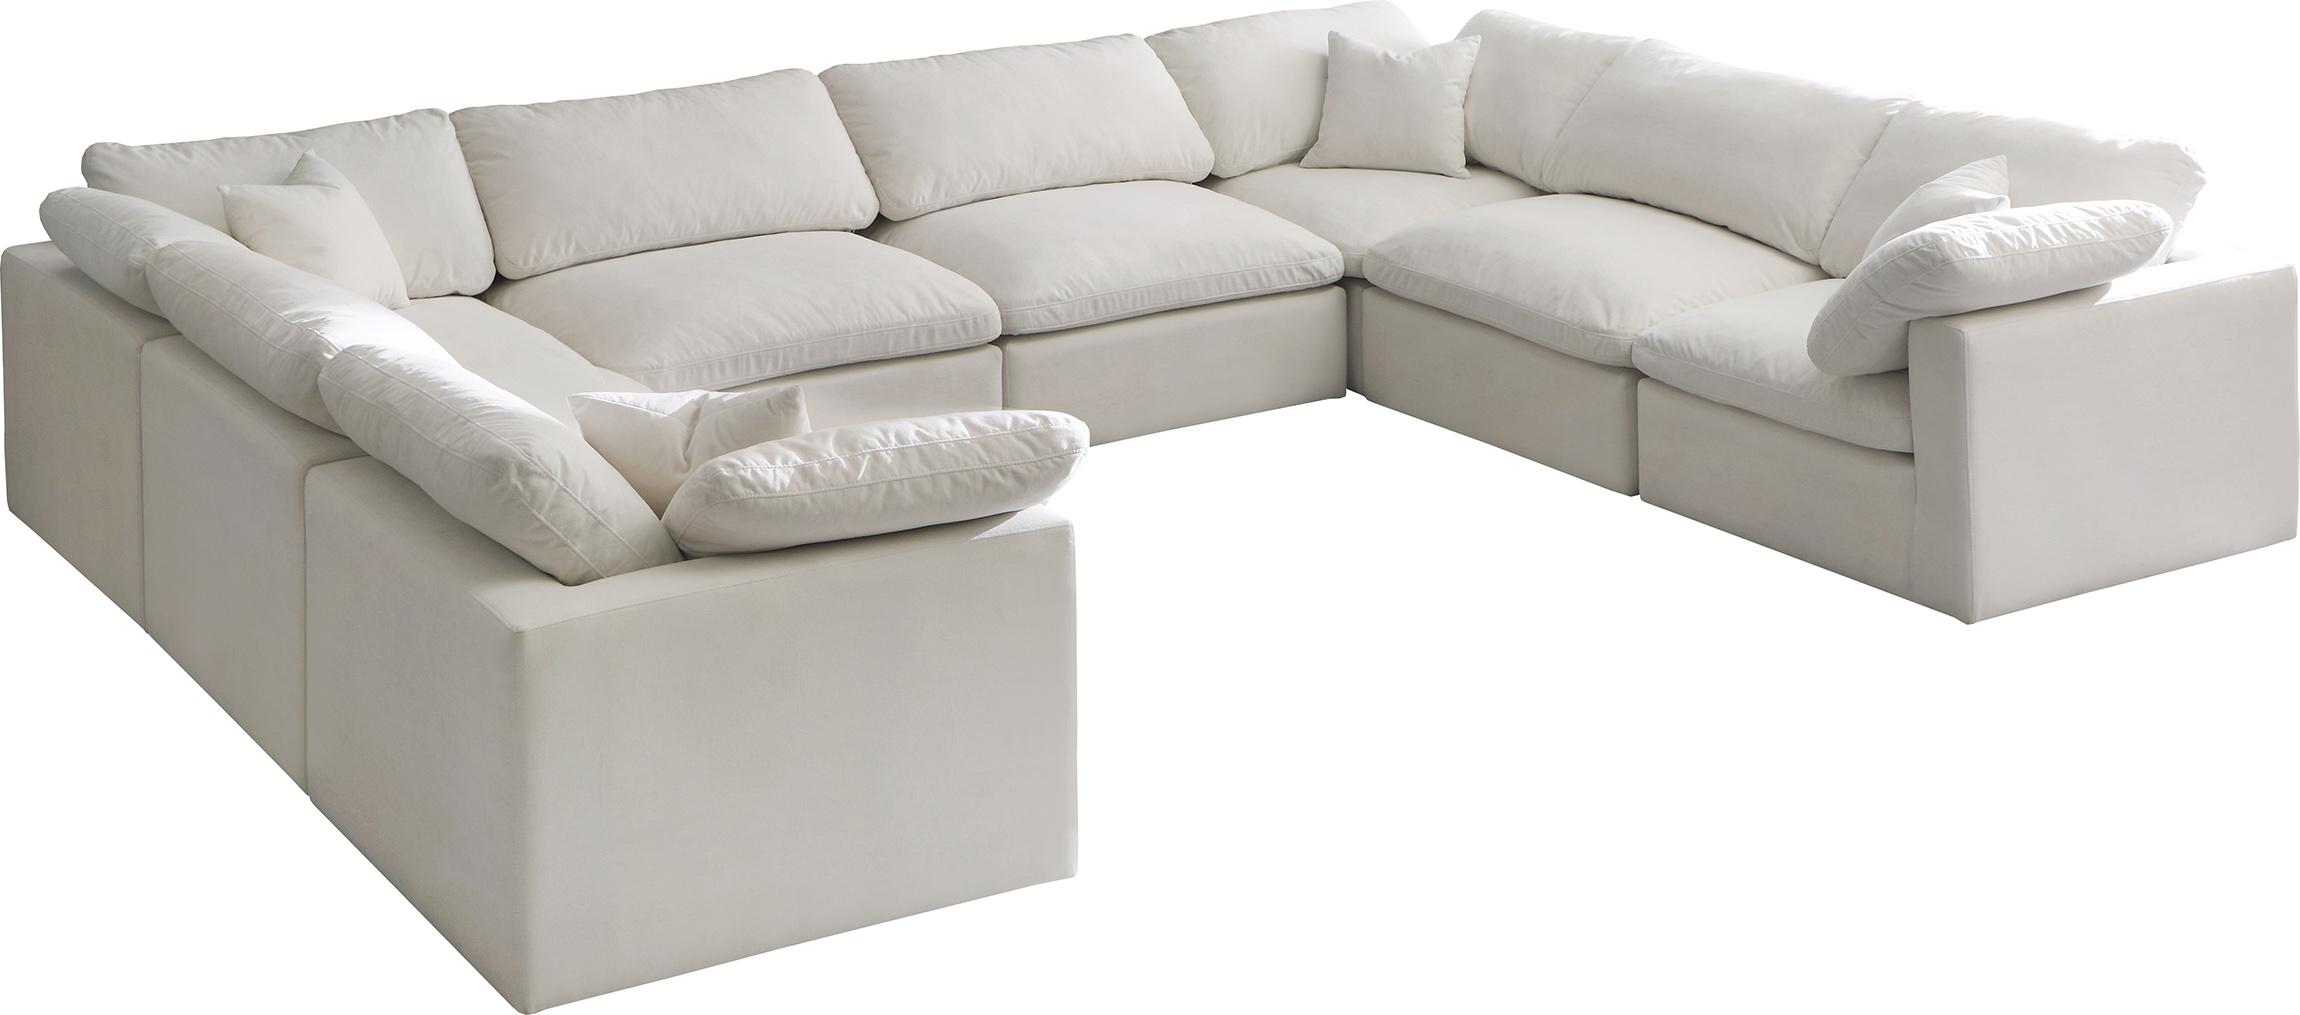 Contemporary, Modern Modular Sectional Sofa 602Cream-Sec8A 602Cream-Sec8A in Cream Fabric